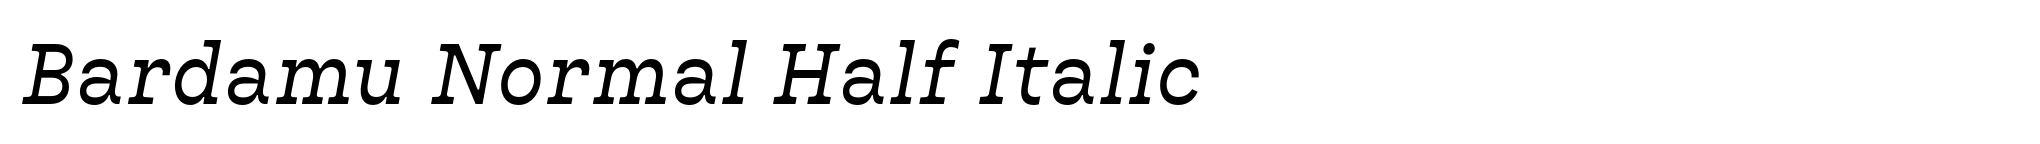 Bardamu Normal Half Italic image